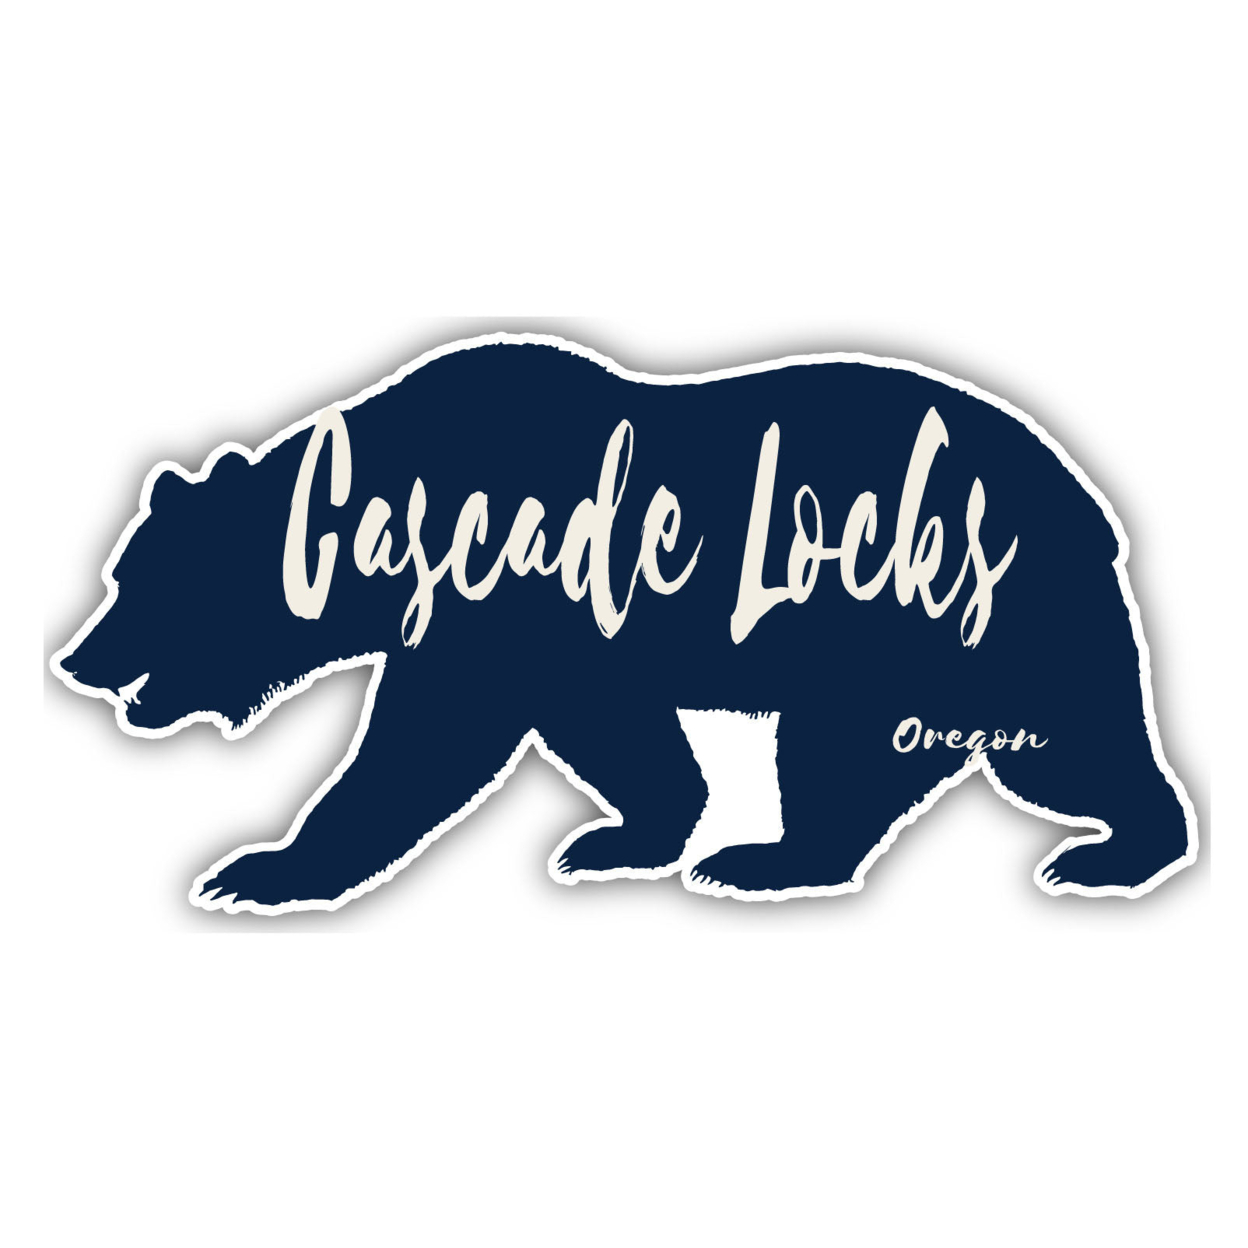 Cascade Locks Oregon Souvenir Decorative Stickers (Choose Theme And Size) - 4-Pack, 8-Inch, Tent